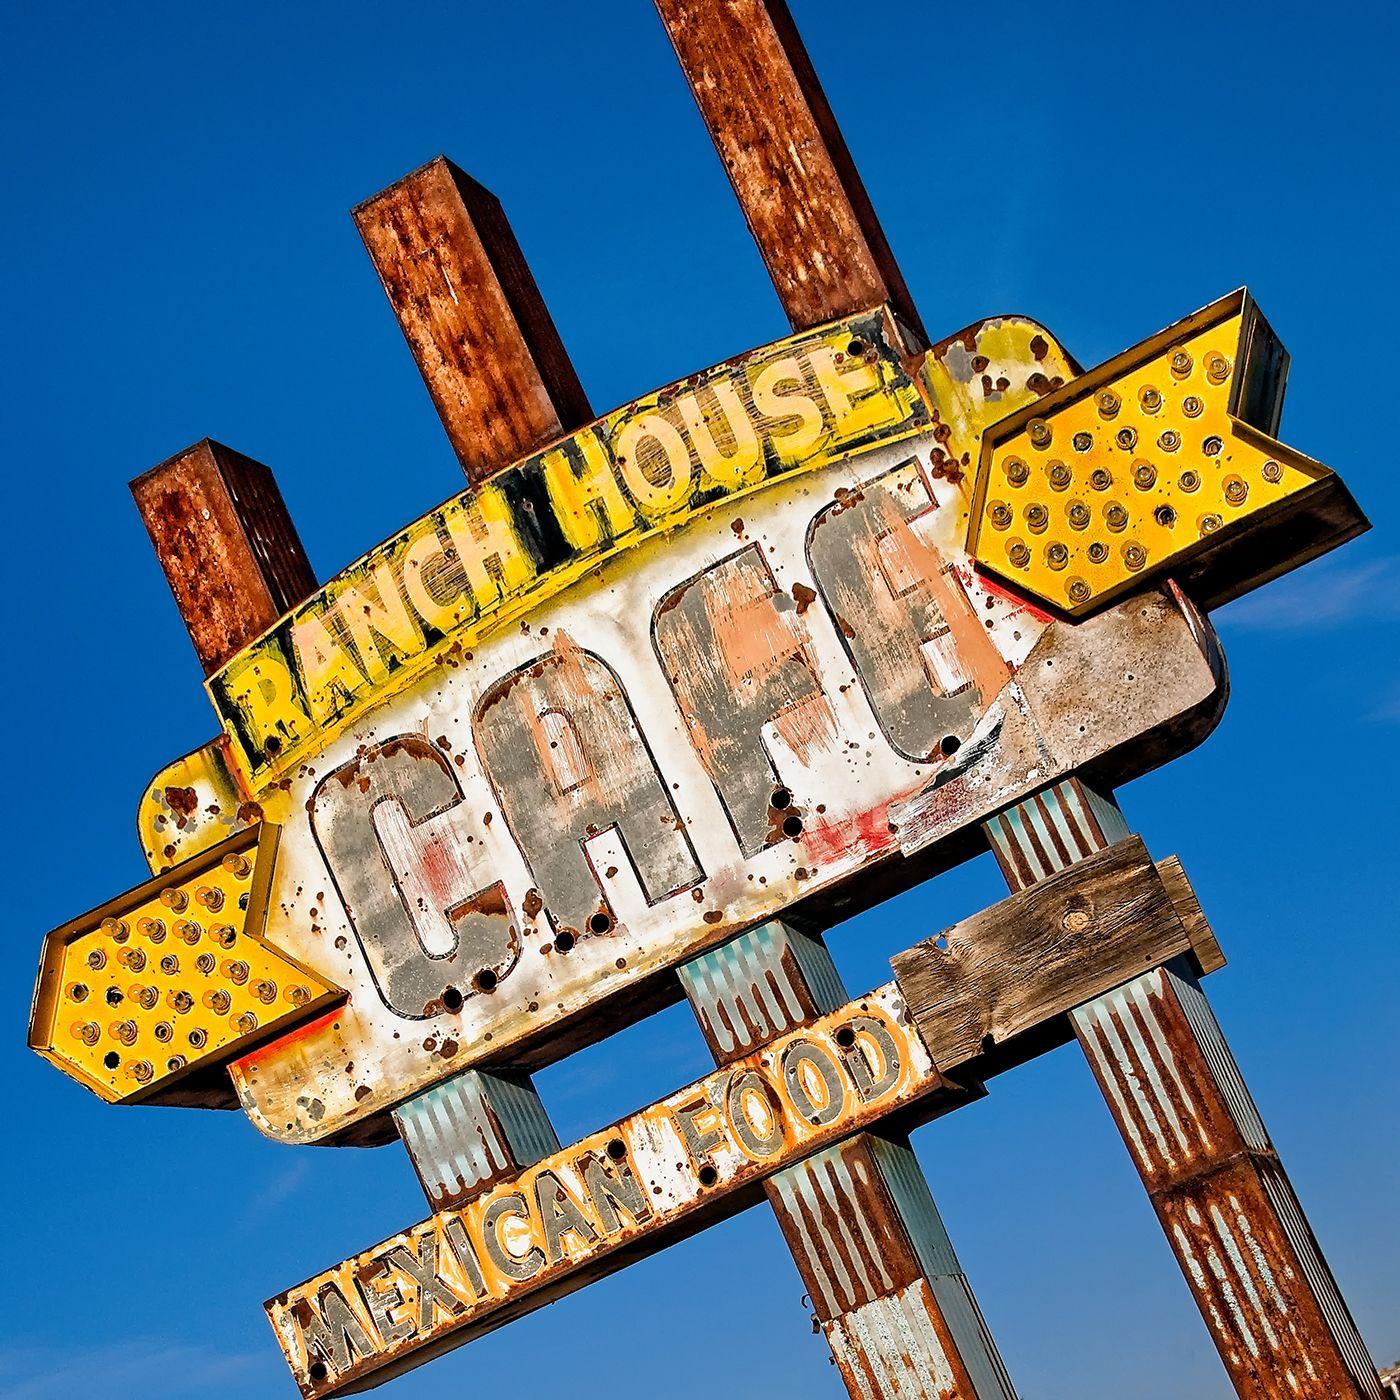 Daniel Ashe Color Photograph - Ranch House Cafe, Photograph, C-Type